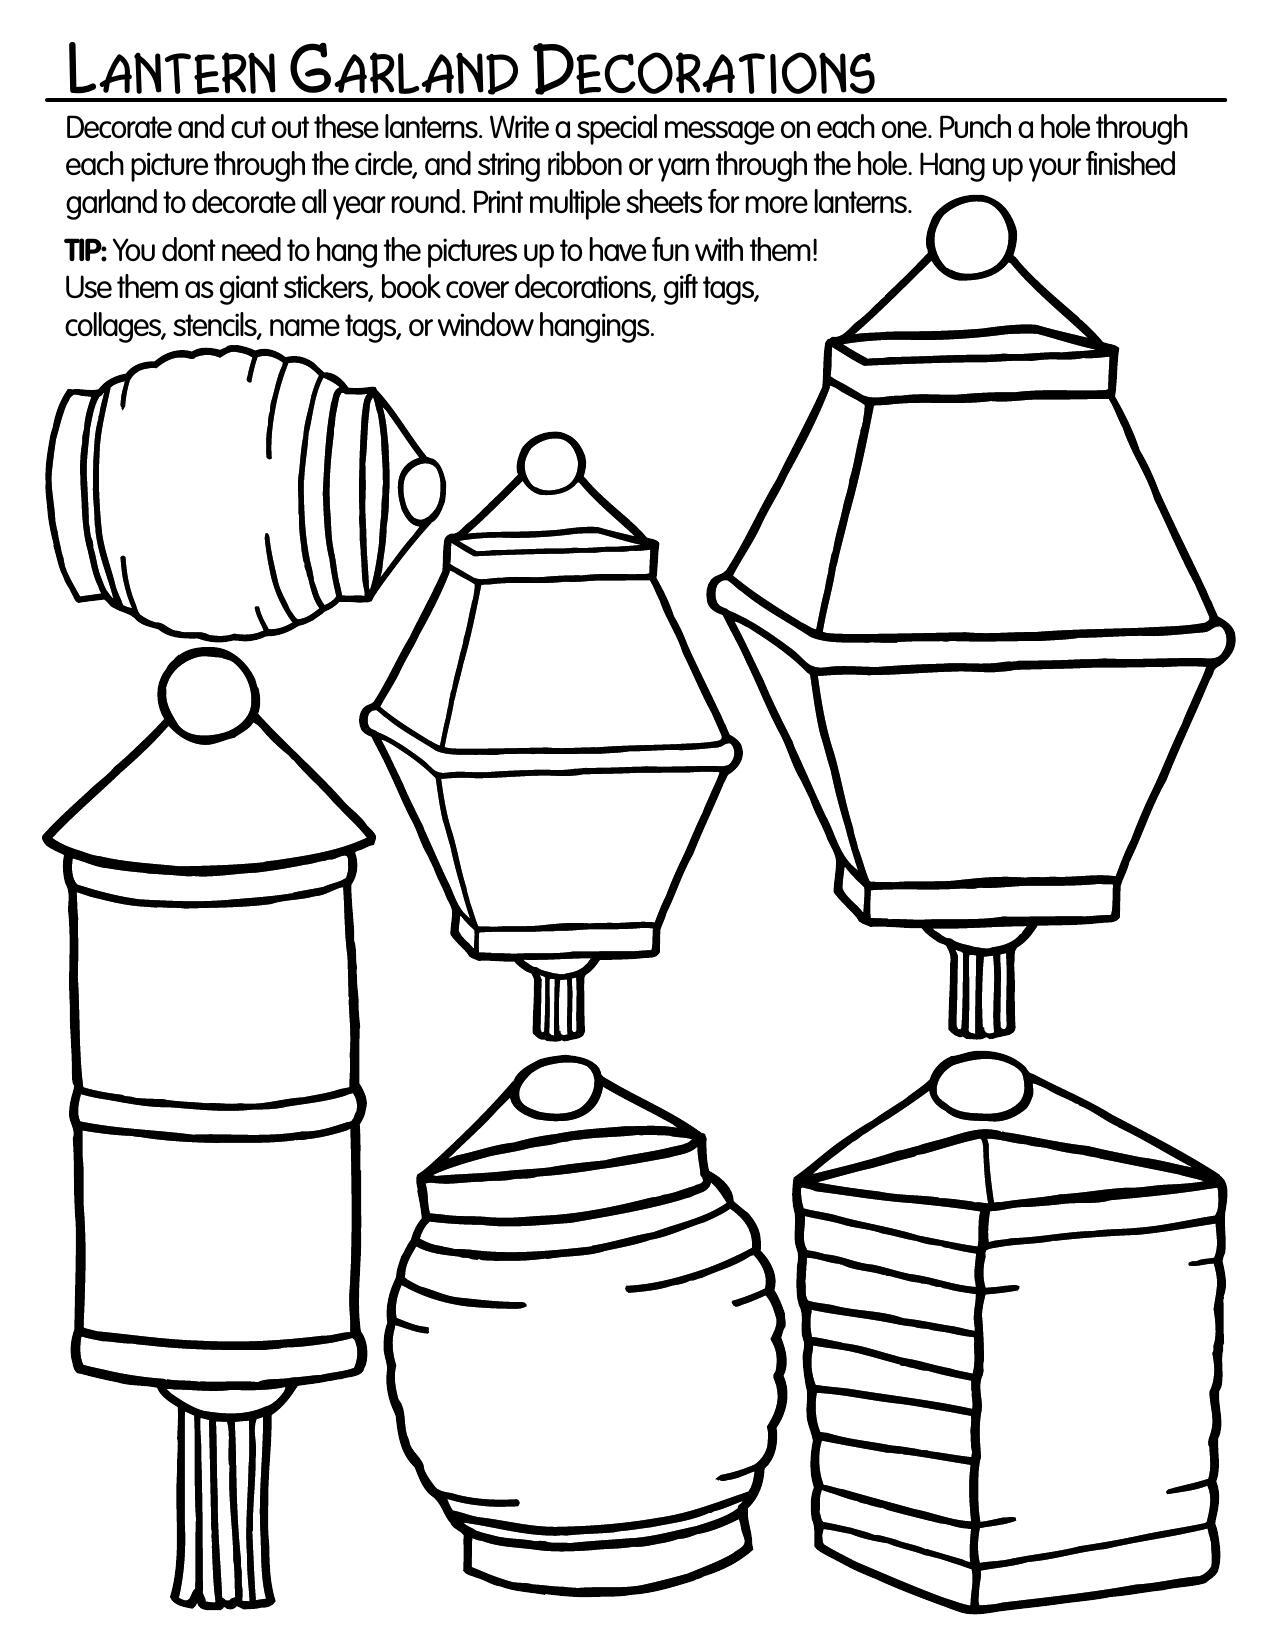 Lantern Garland Decorations